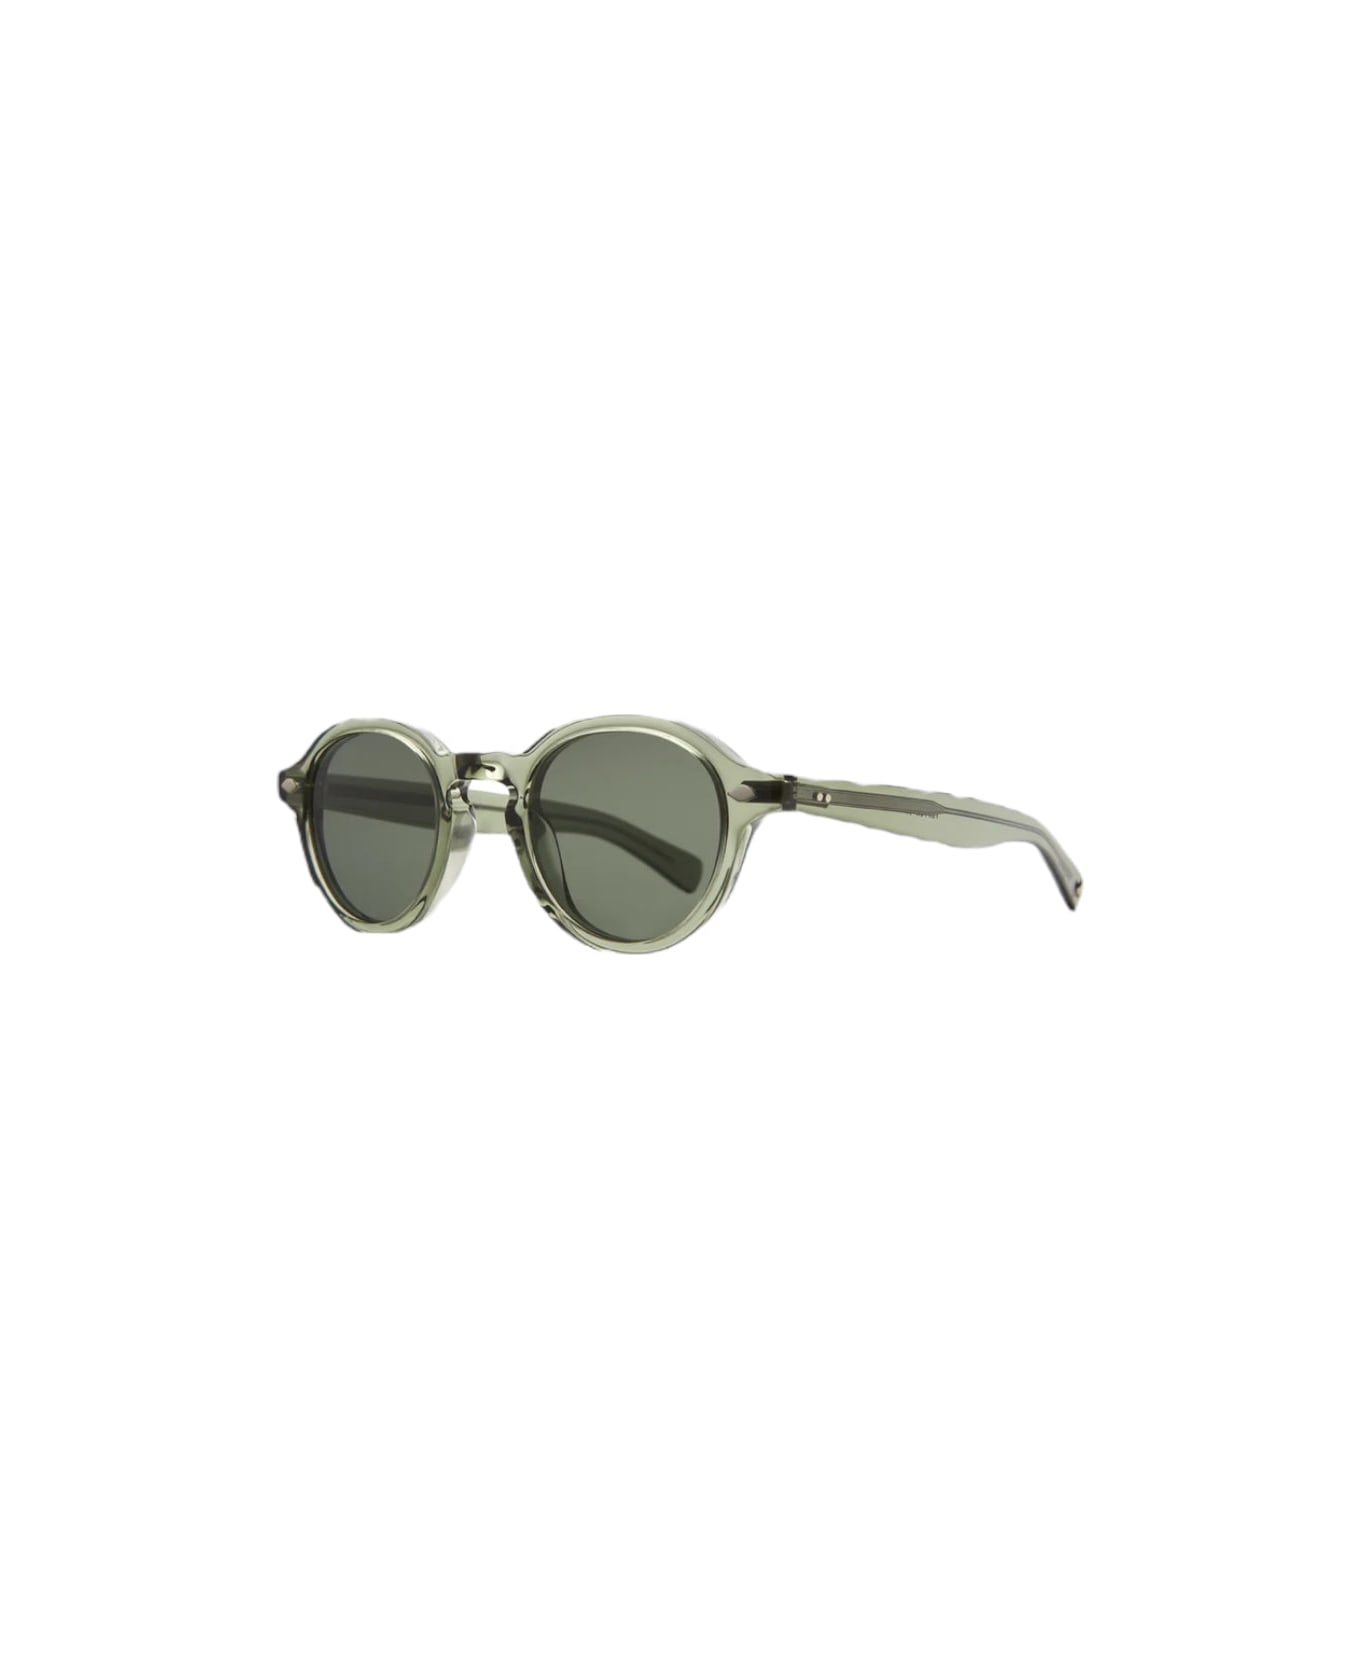 Garrett Leight Flipper Sunglasses